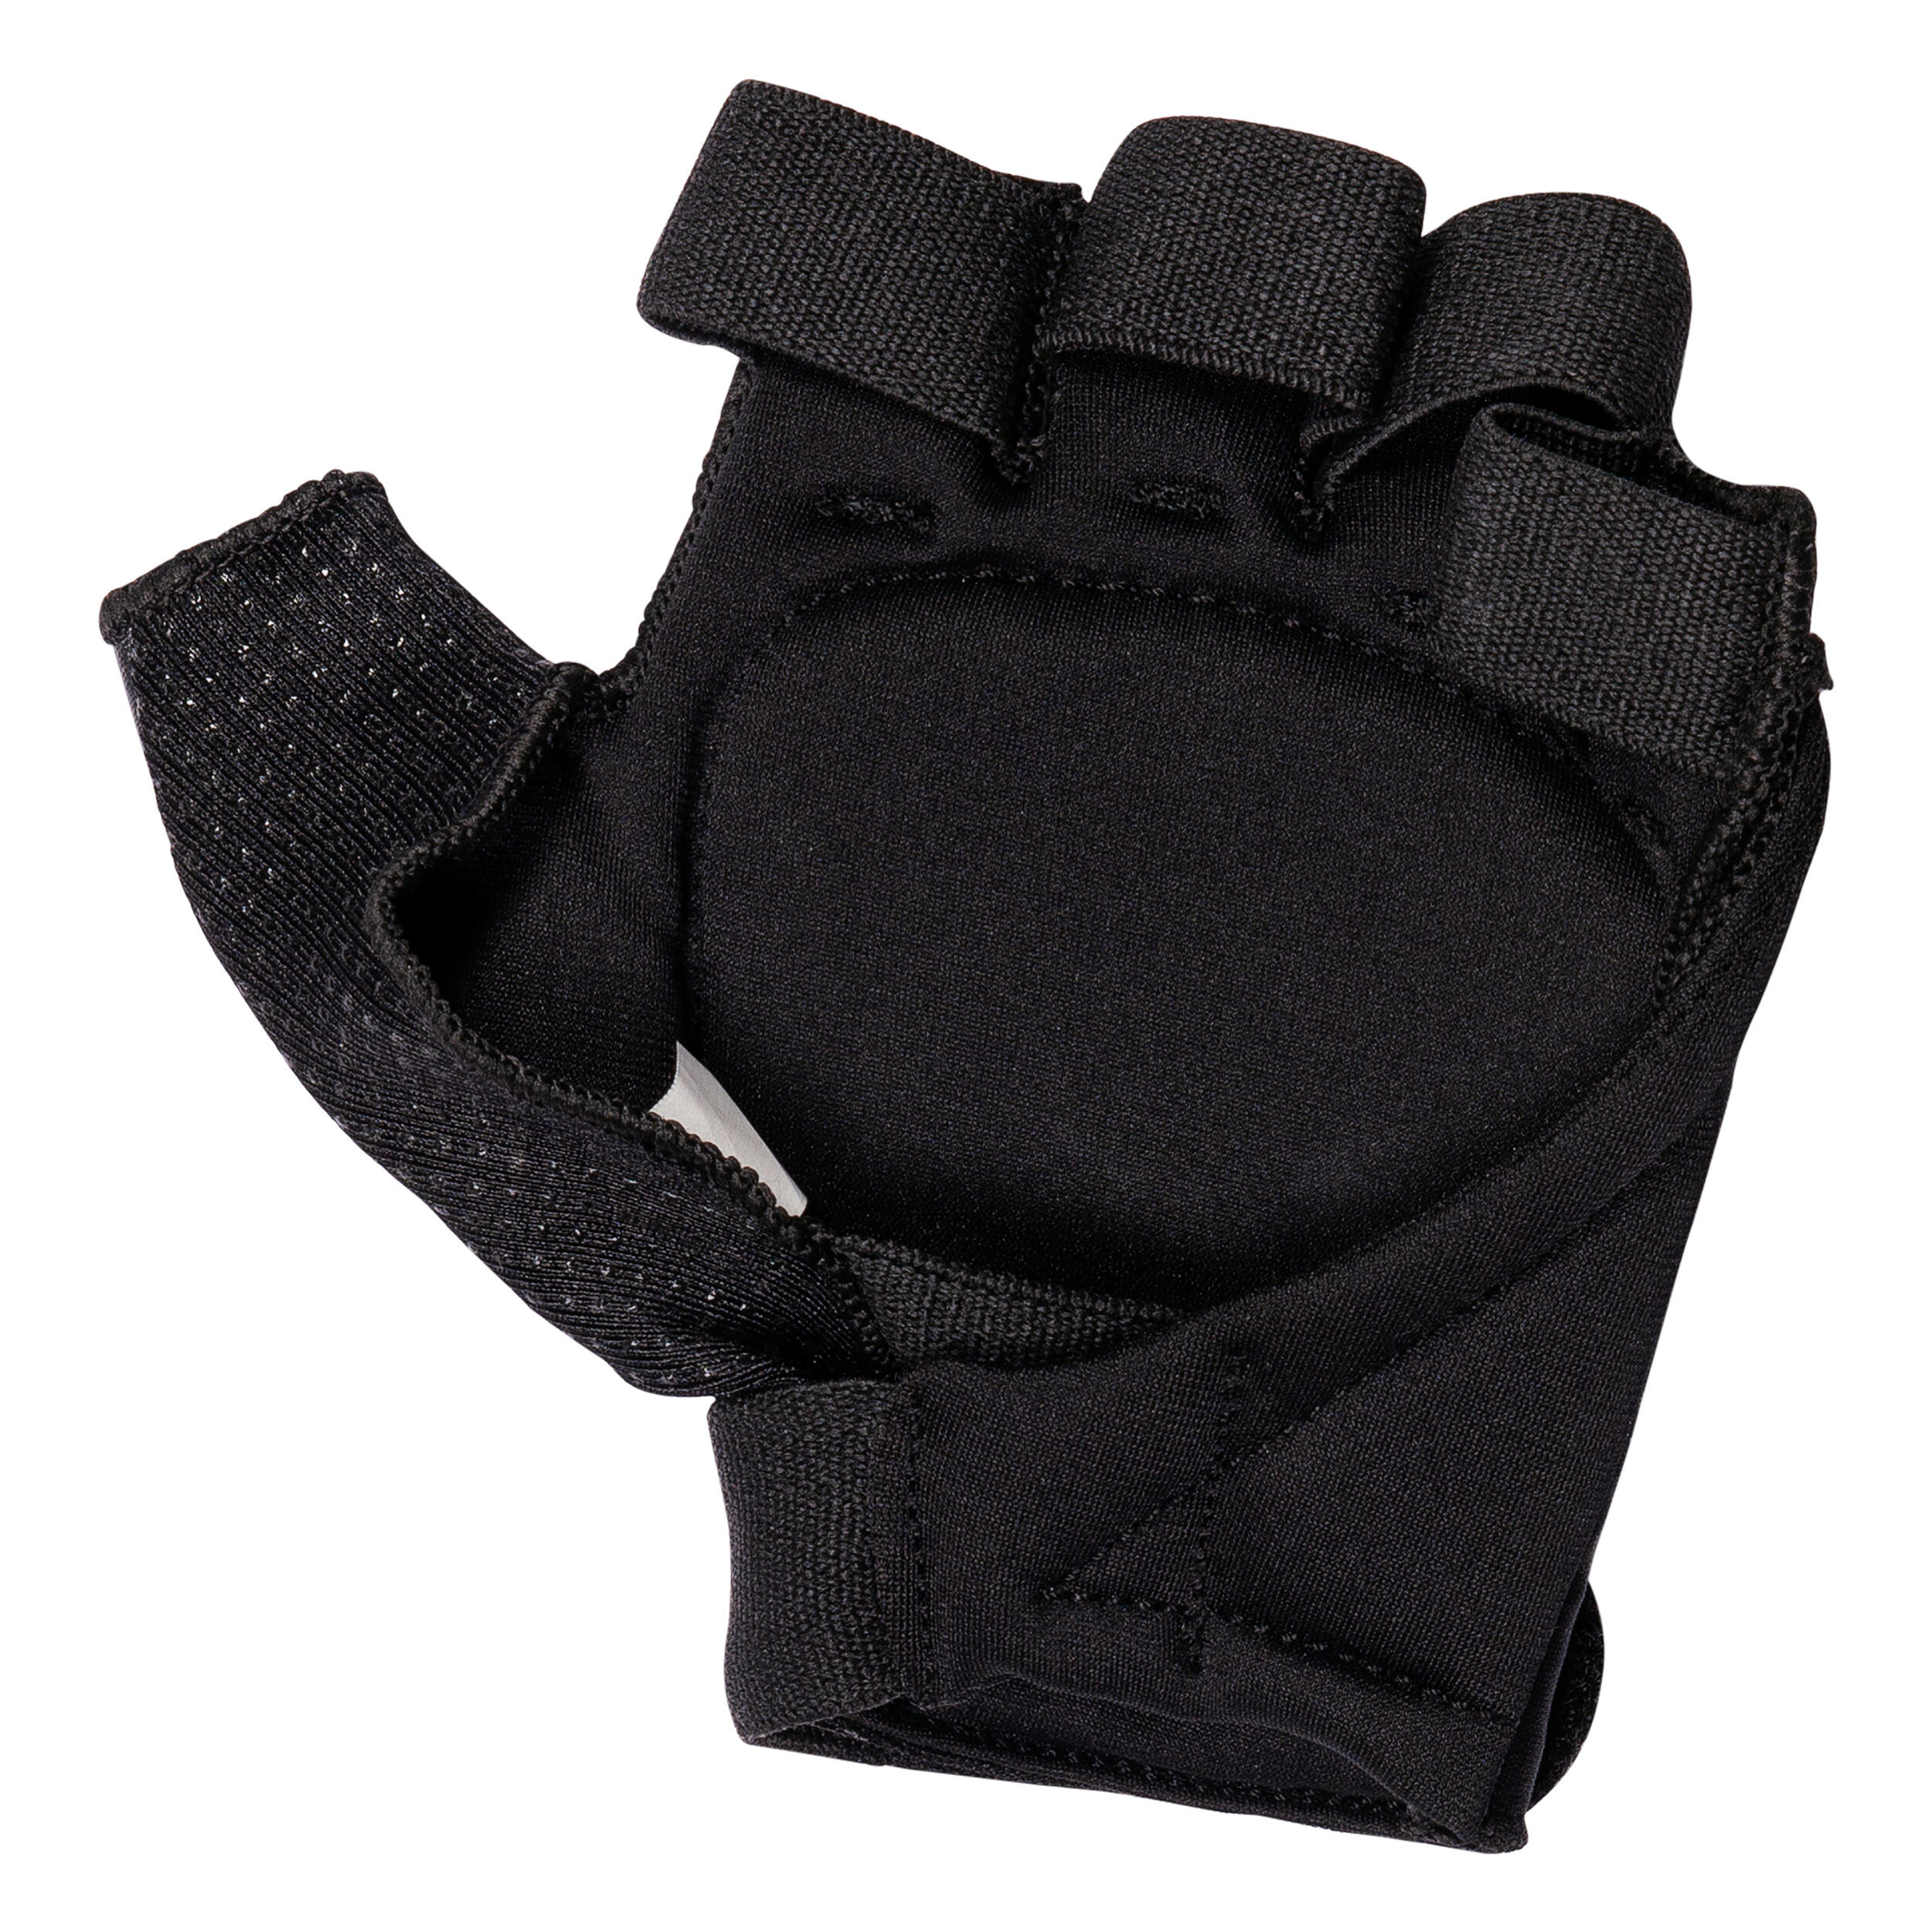 Kids'/Adult Medium-Intensity 1 Knuckle Field Hockey Glove FG510 - Black/Grey 3/6